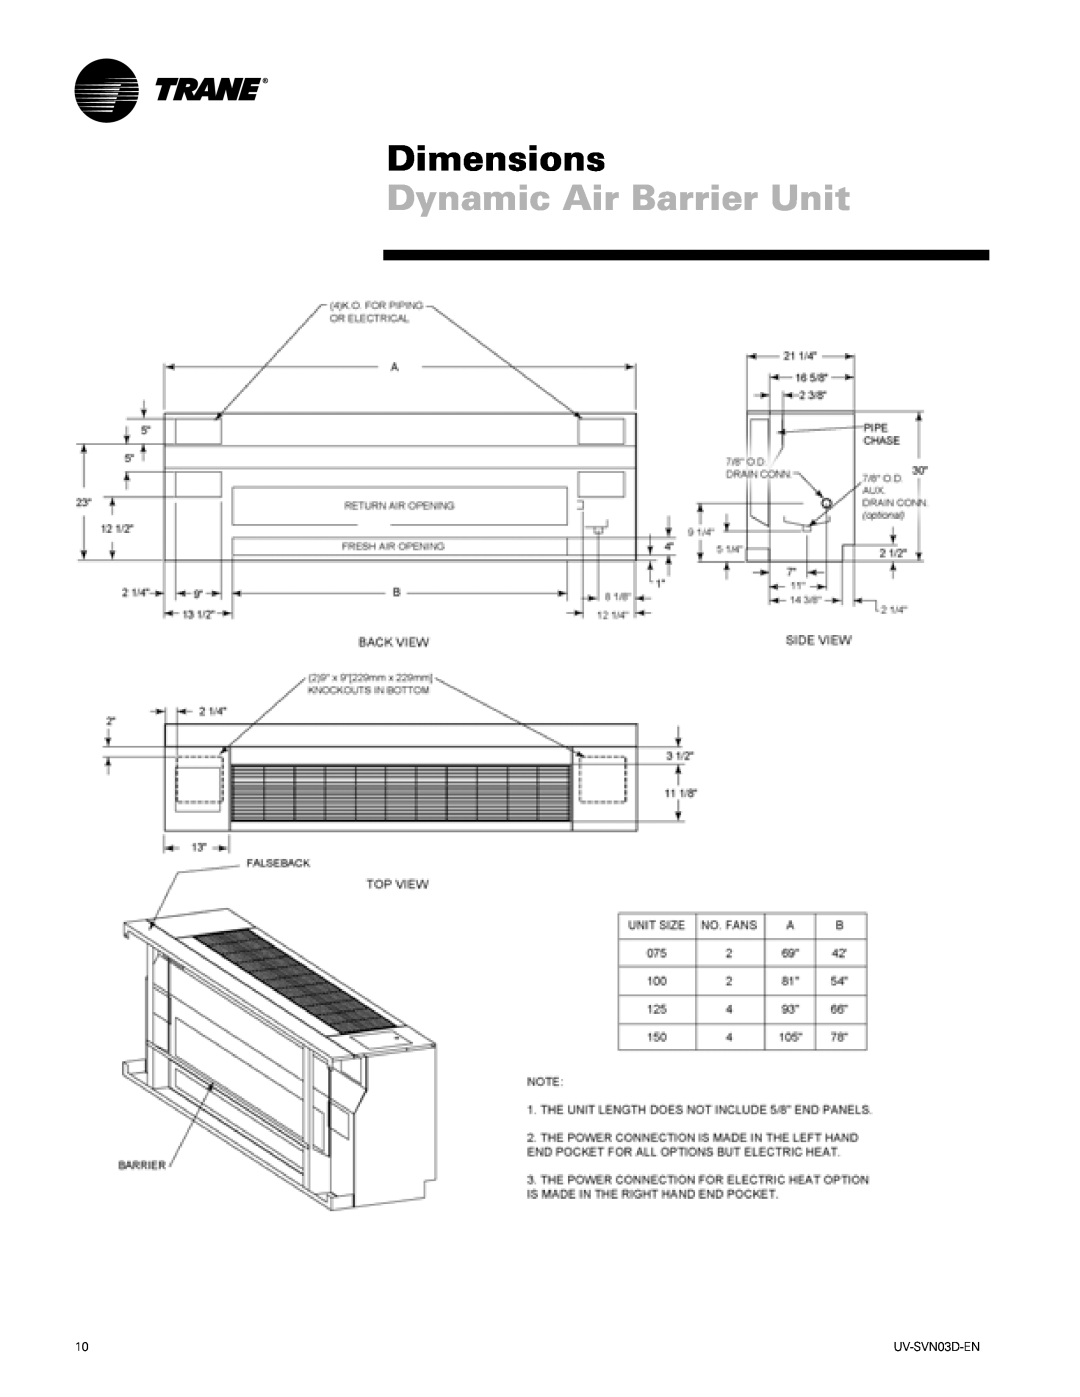 Trane 1500 CFM, 750 CFM manual Dynamic Air Barrier Unit, Dimensions 